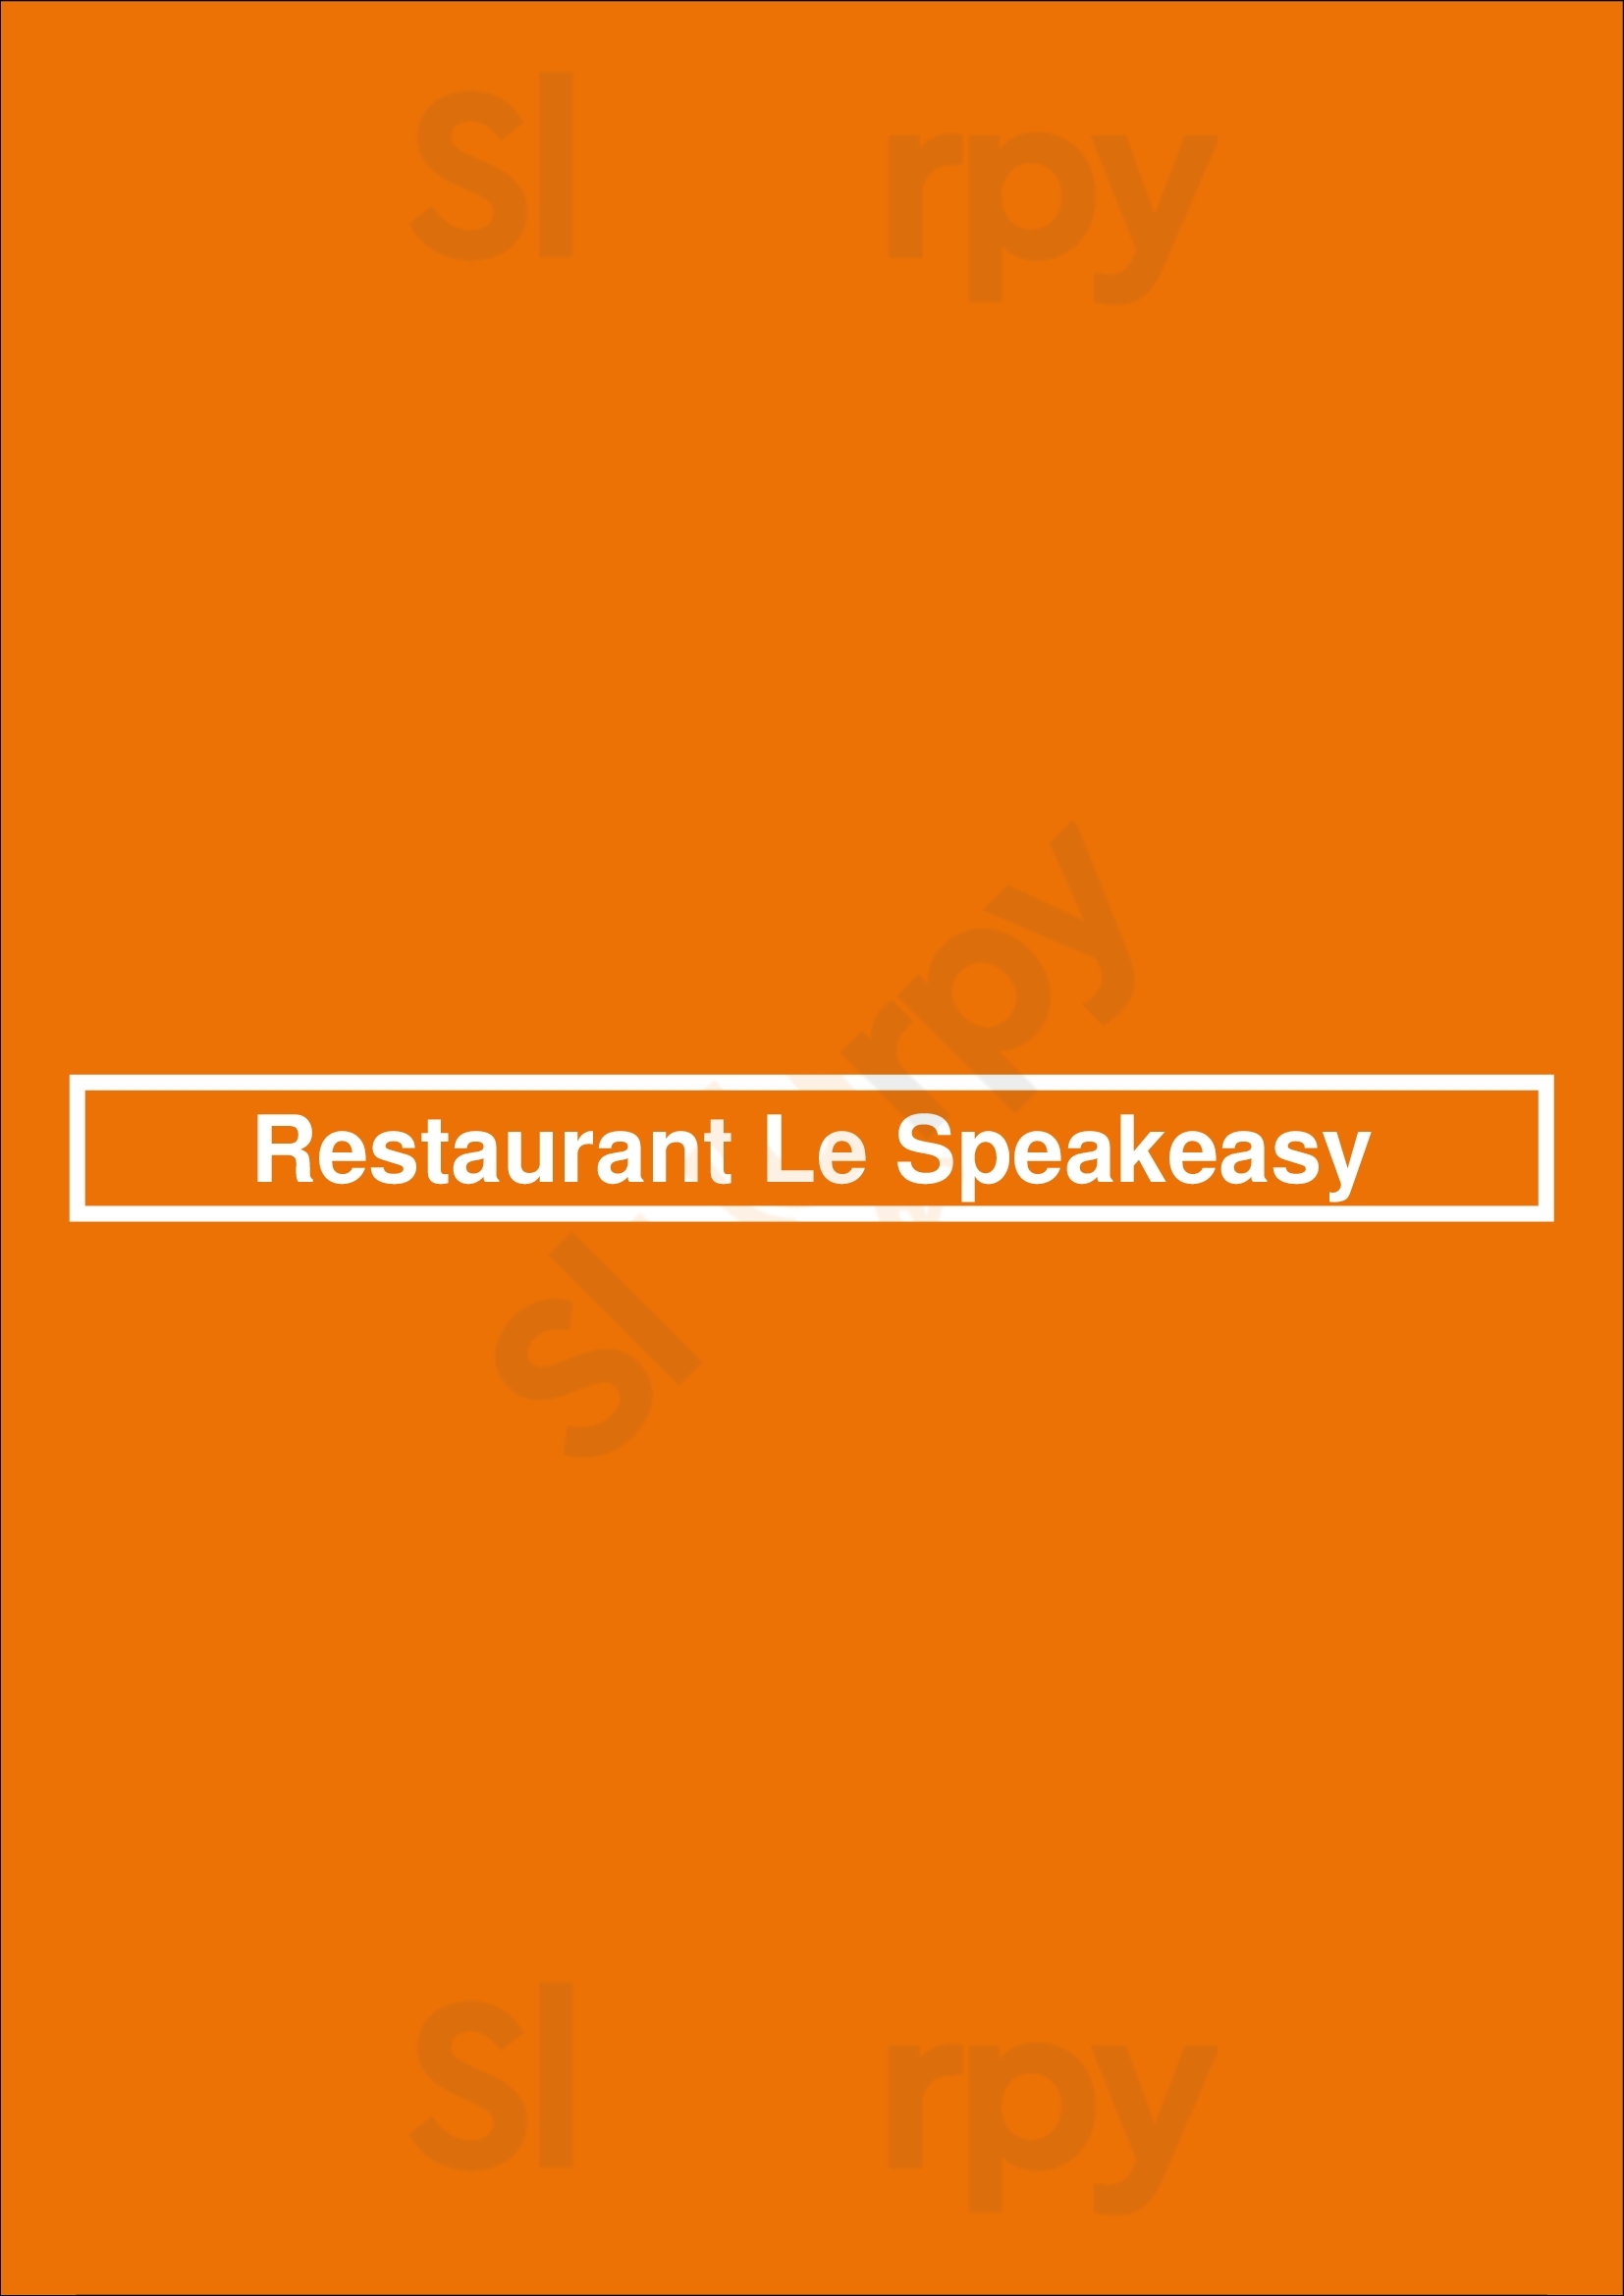 Restaurant Le Speakeasy Montreal Menu - 1